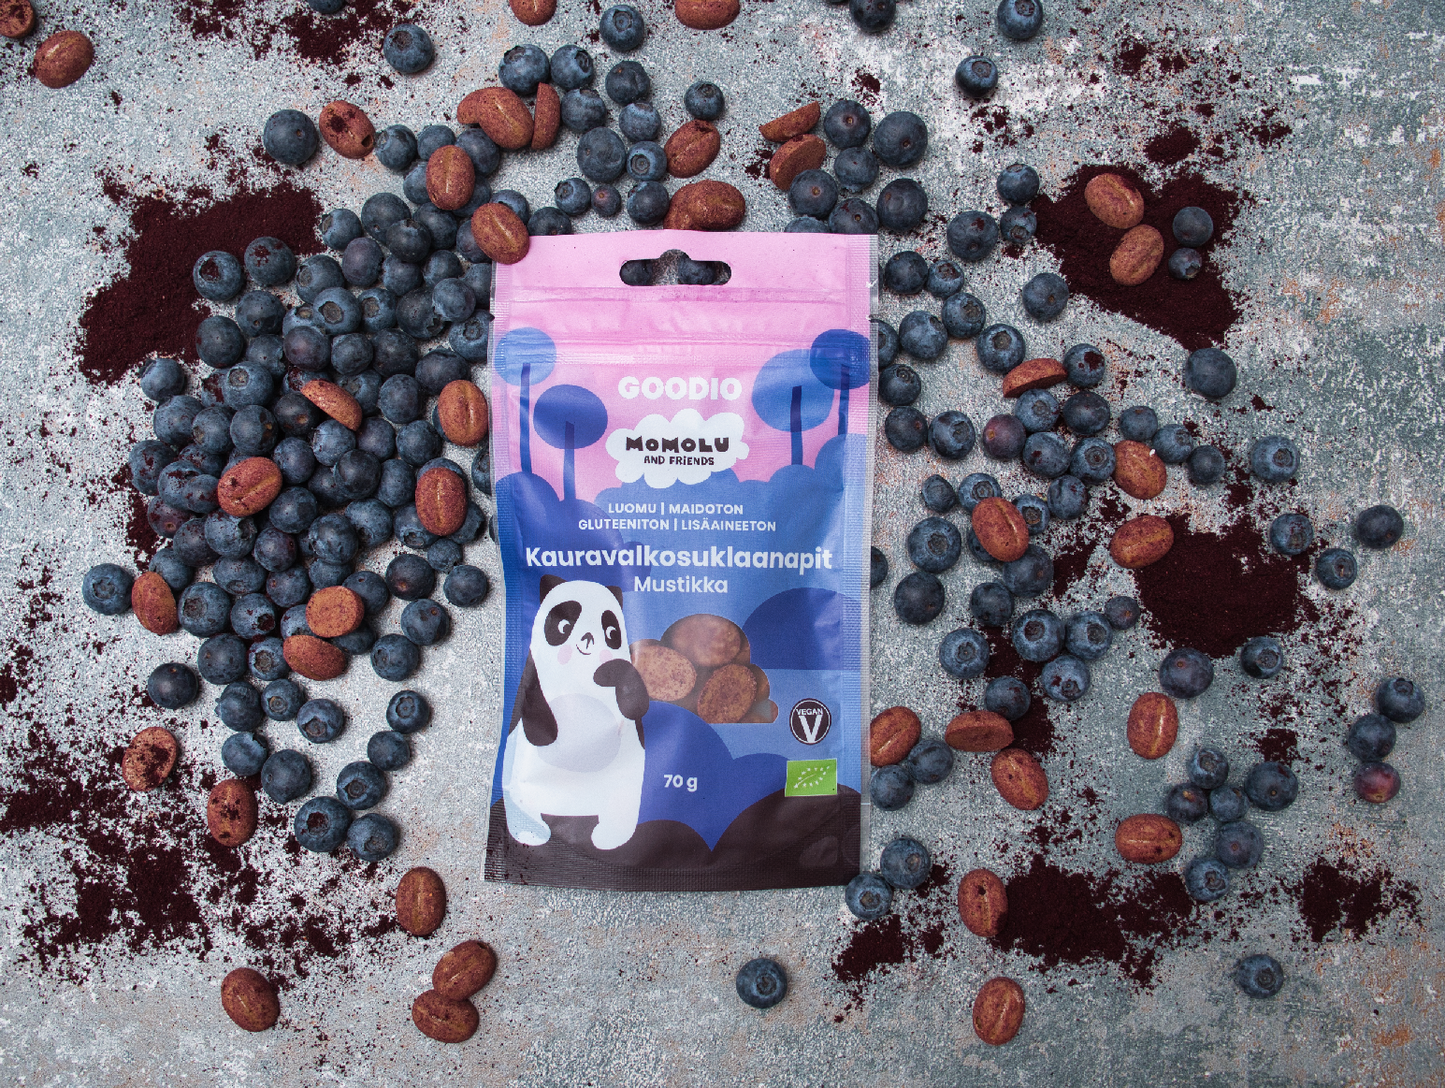 Goodio X Momolu Blueberry White Oat Chocolate beans